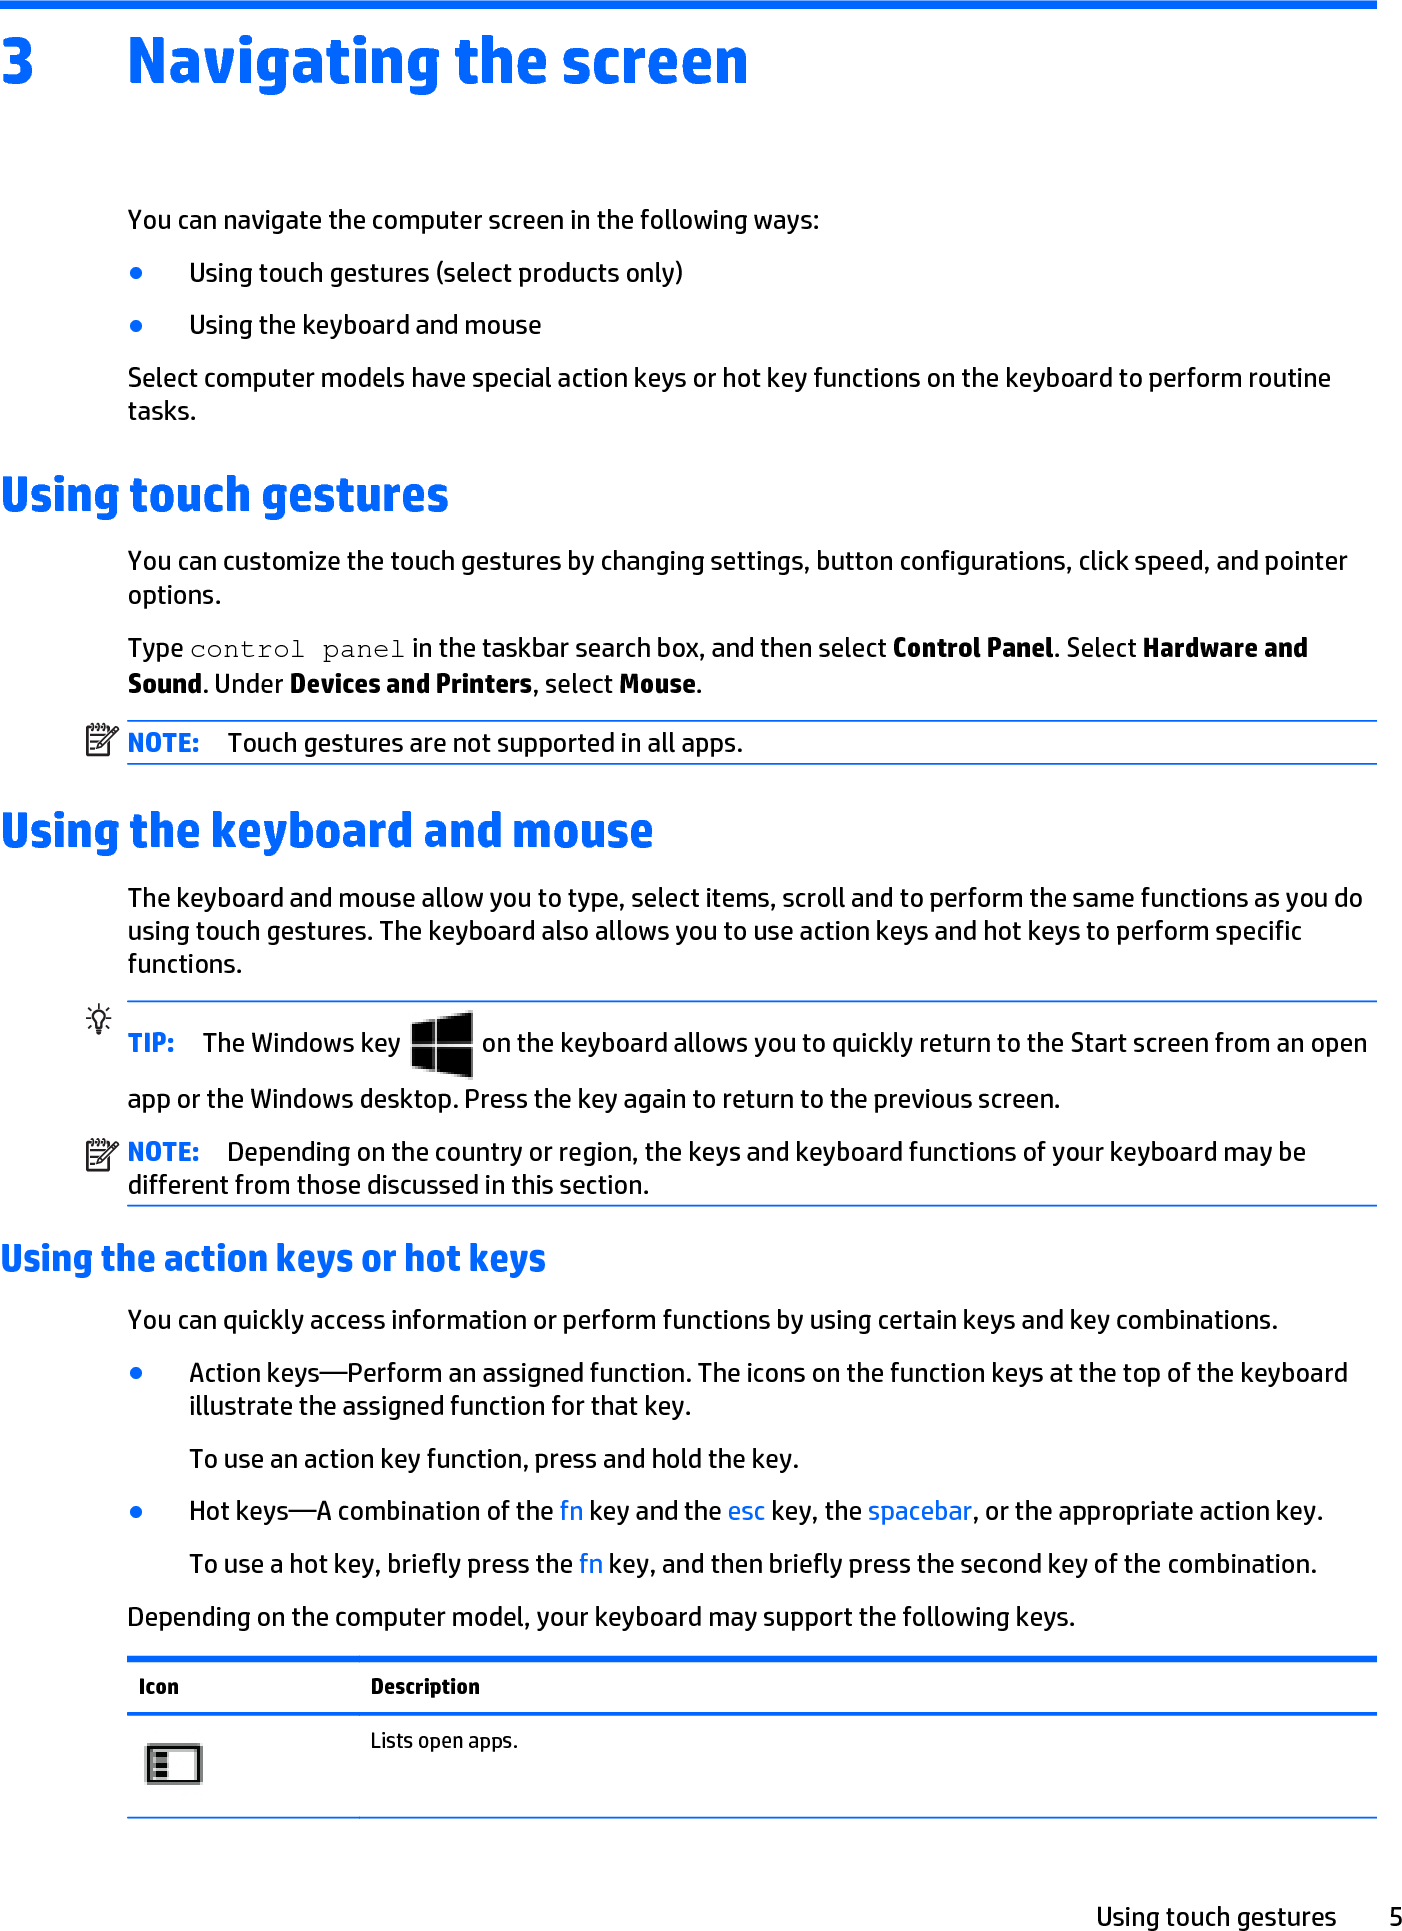 Nulaxy Wireless Bluetooth Keyboard Users Manual